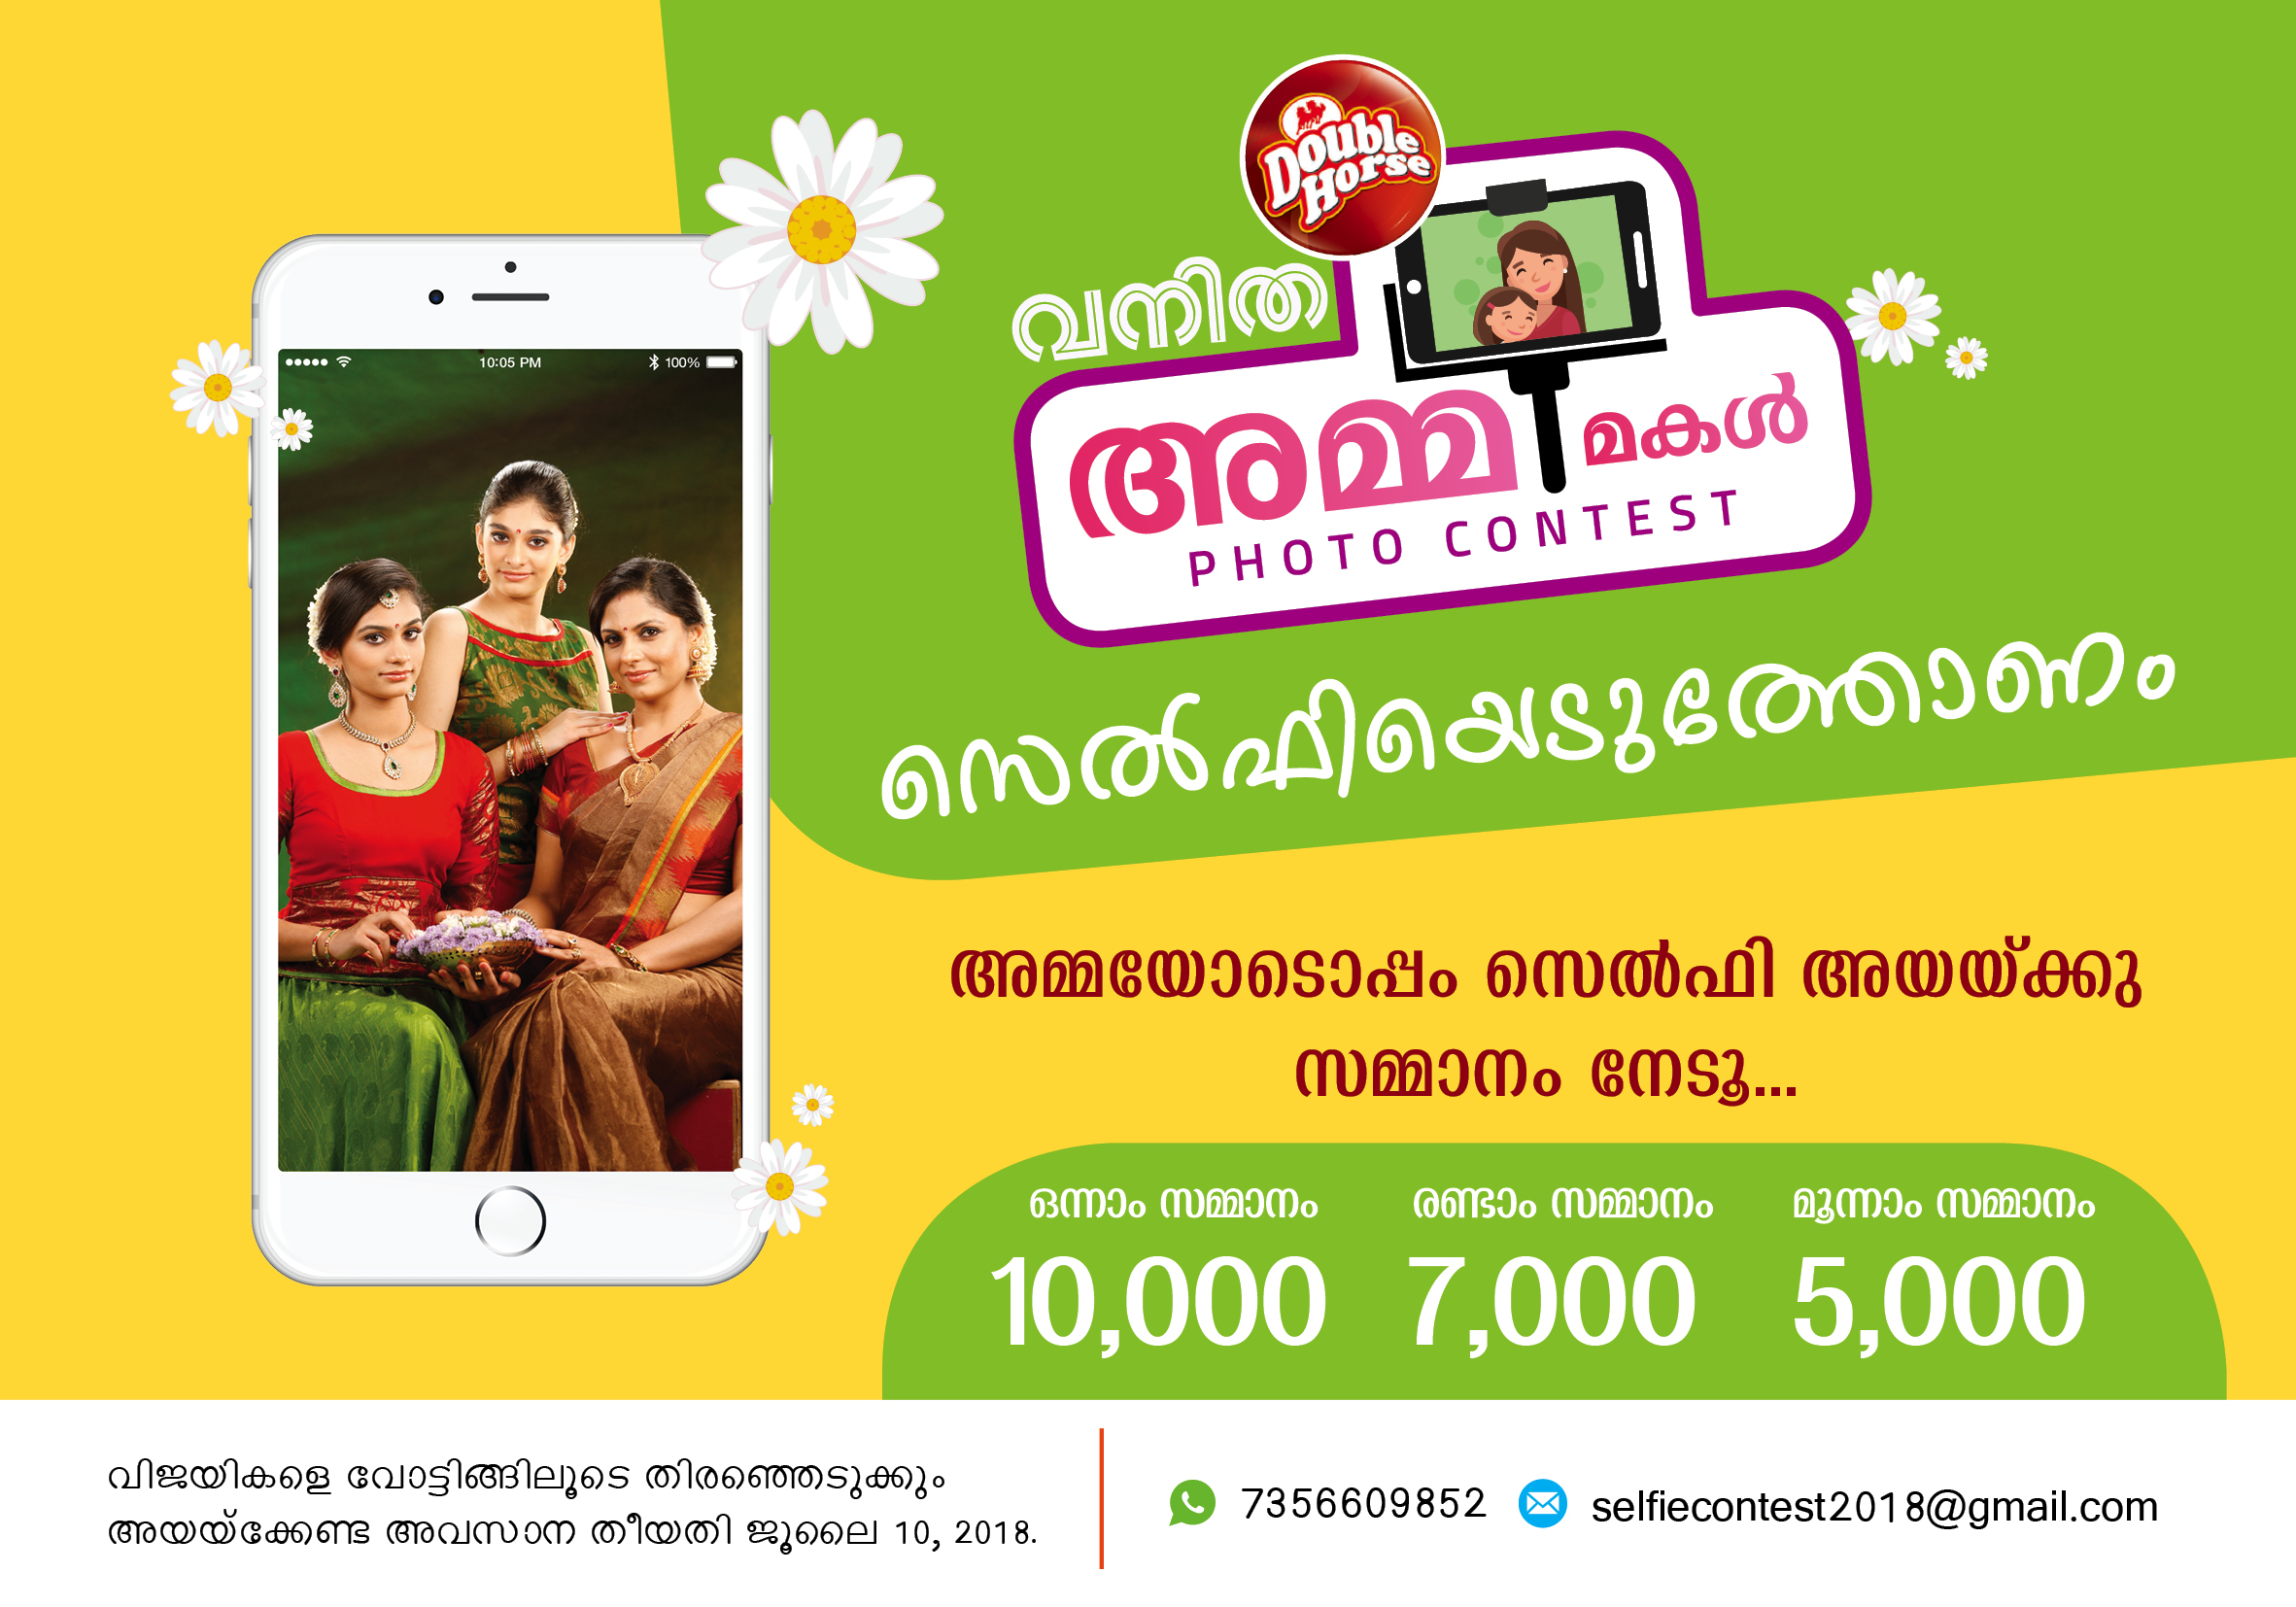 DoubleHorse-Vanitha "AmmaMakal" Onam Selfie Contest 2018, Kottayam, Kerala, India